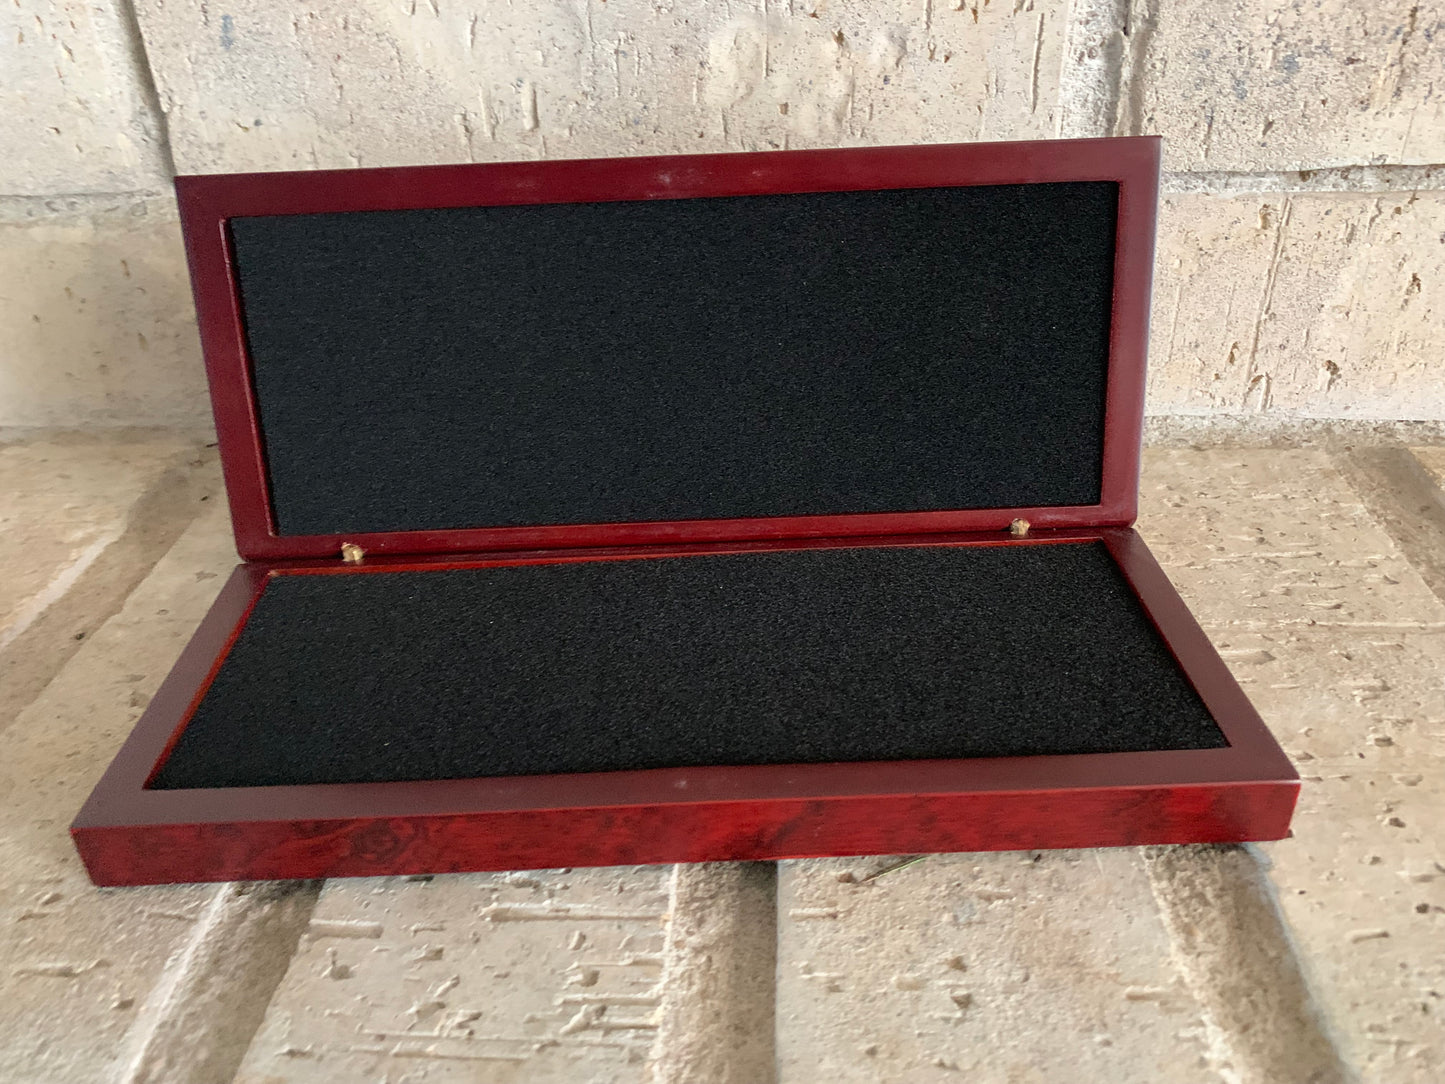 GBS-001 Small Gift Box